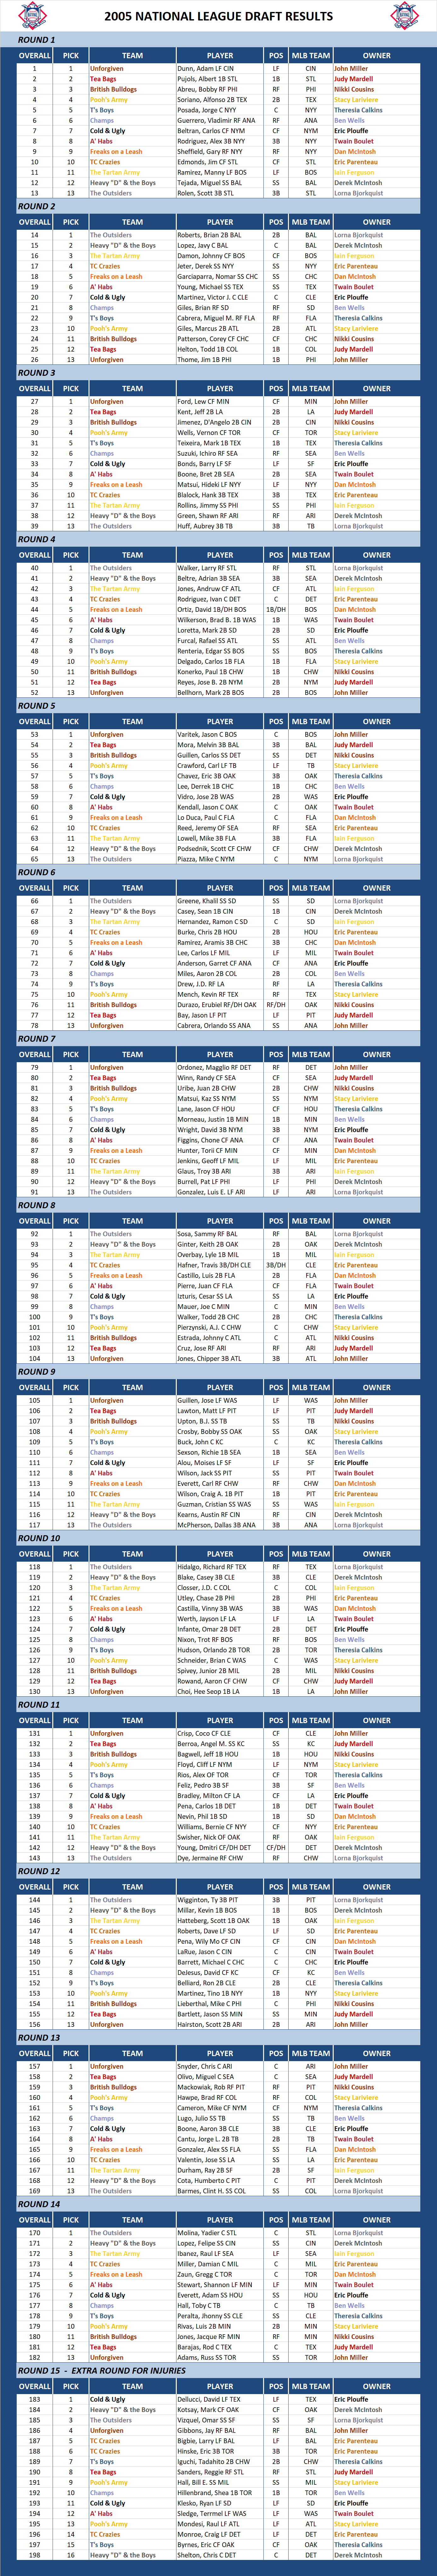 2005 Major league Baseball Draft Results